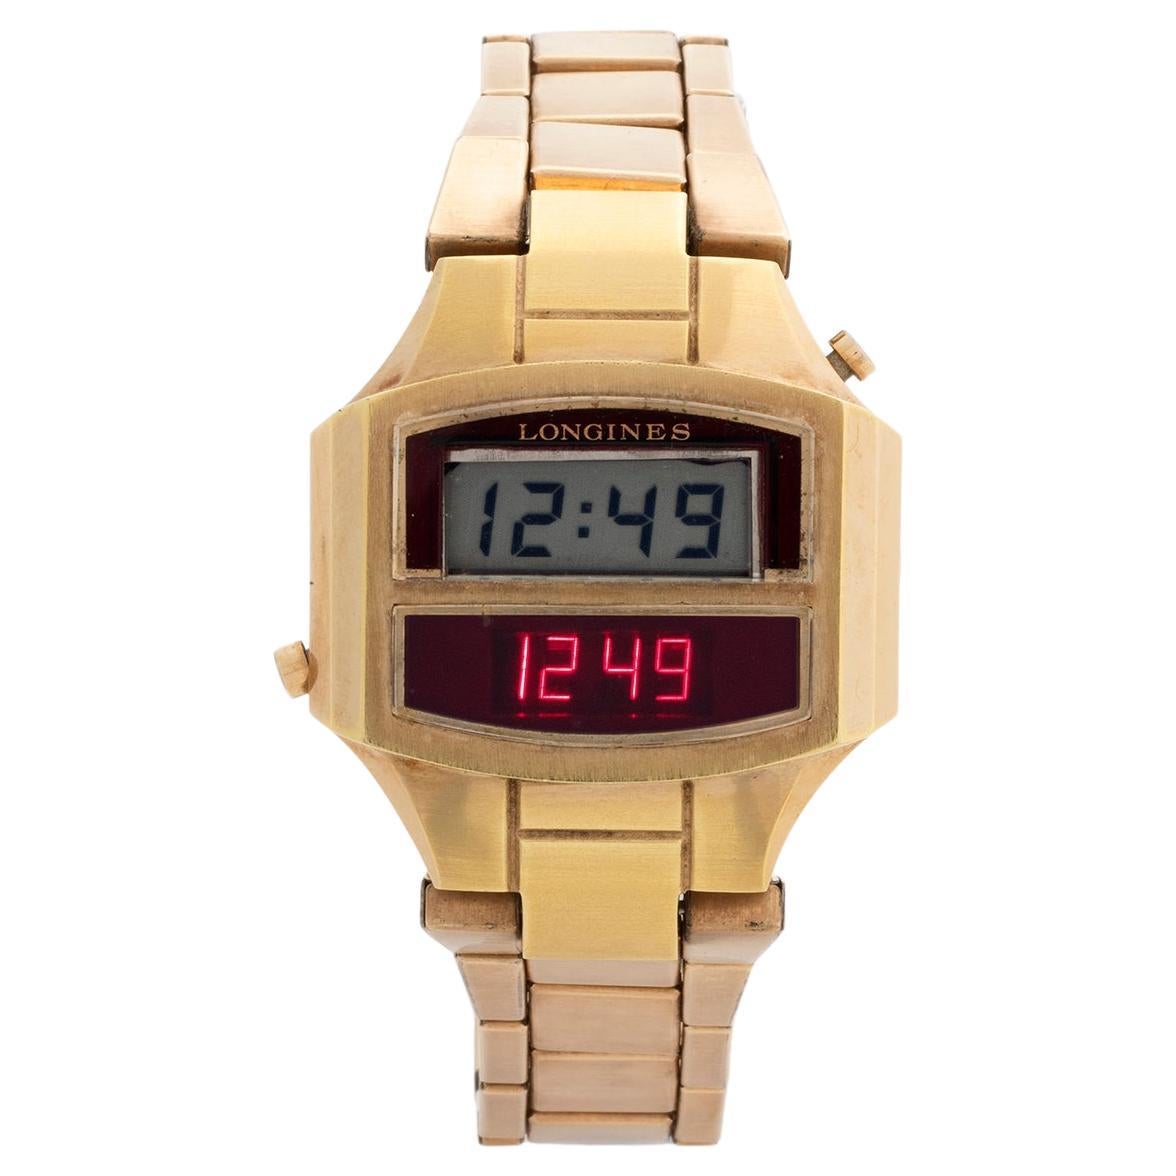 Longines Gemini 11 Digital Wristwatch, Gold Plated, Very Rare, c 1976.